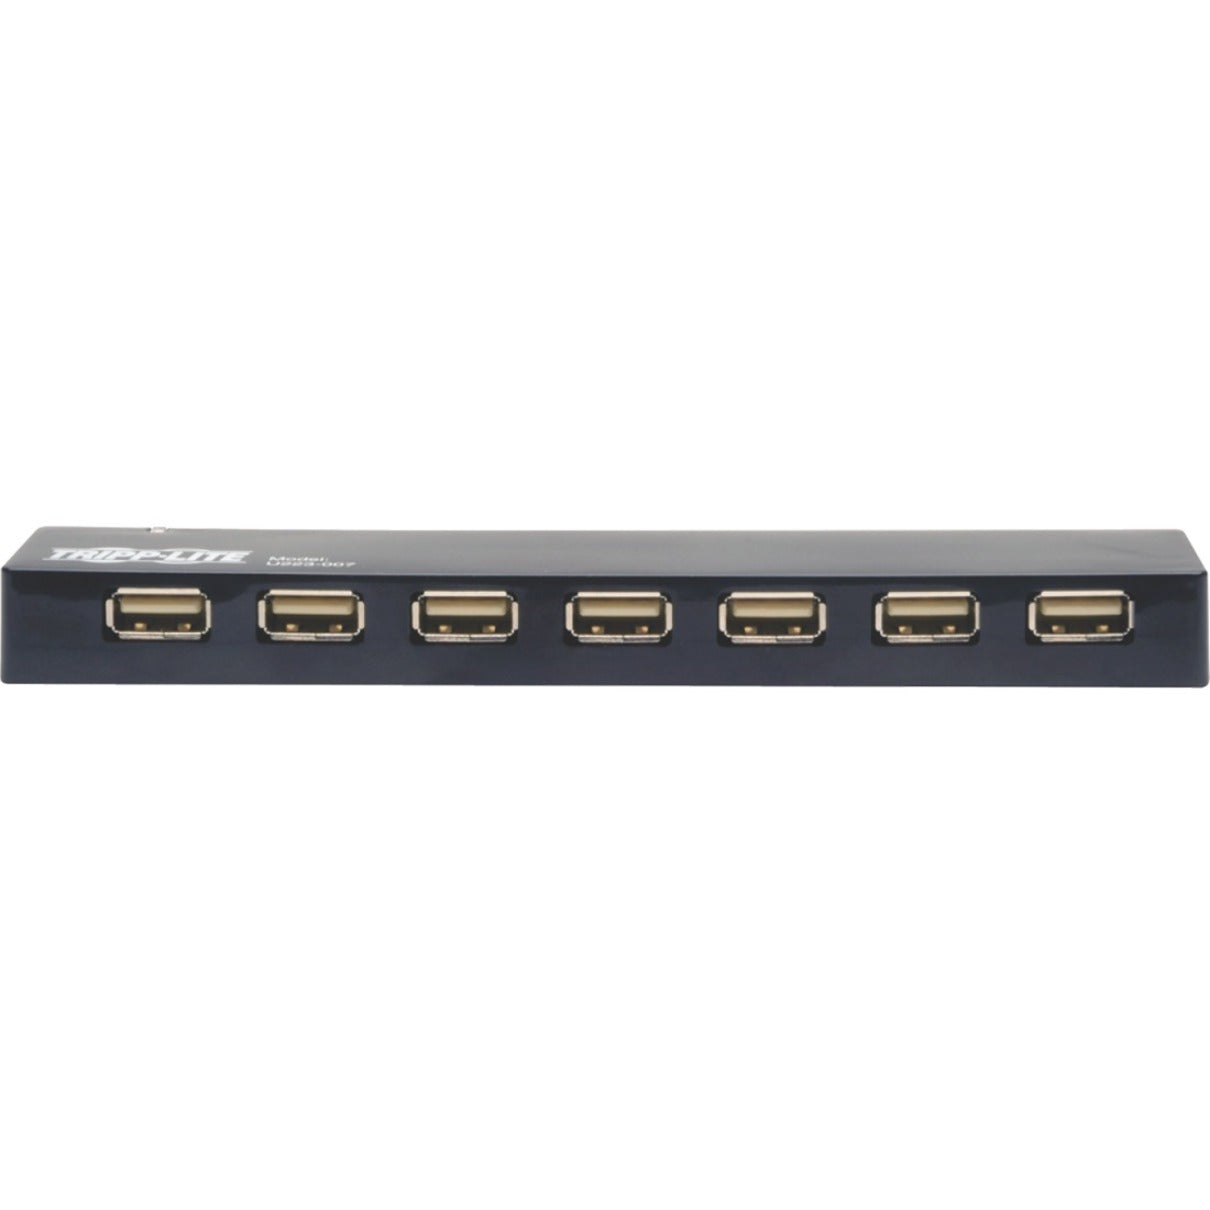 Tripp Lite U223-007 7-Port USB 2.0 Hi-Speed Hub, Expand Your USB Connectivity